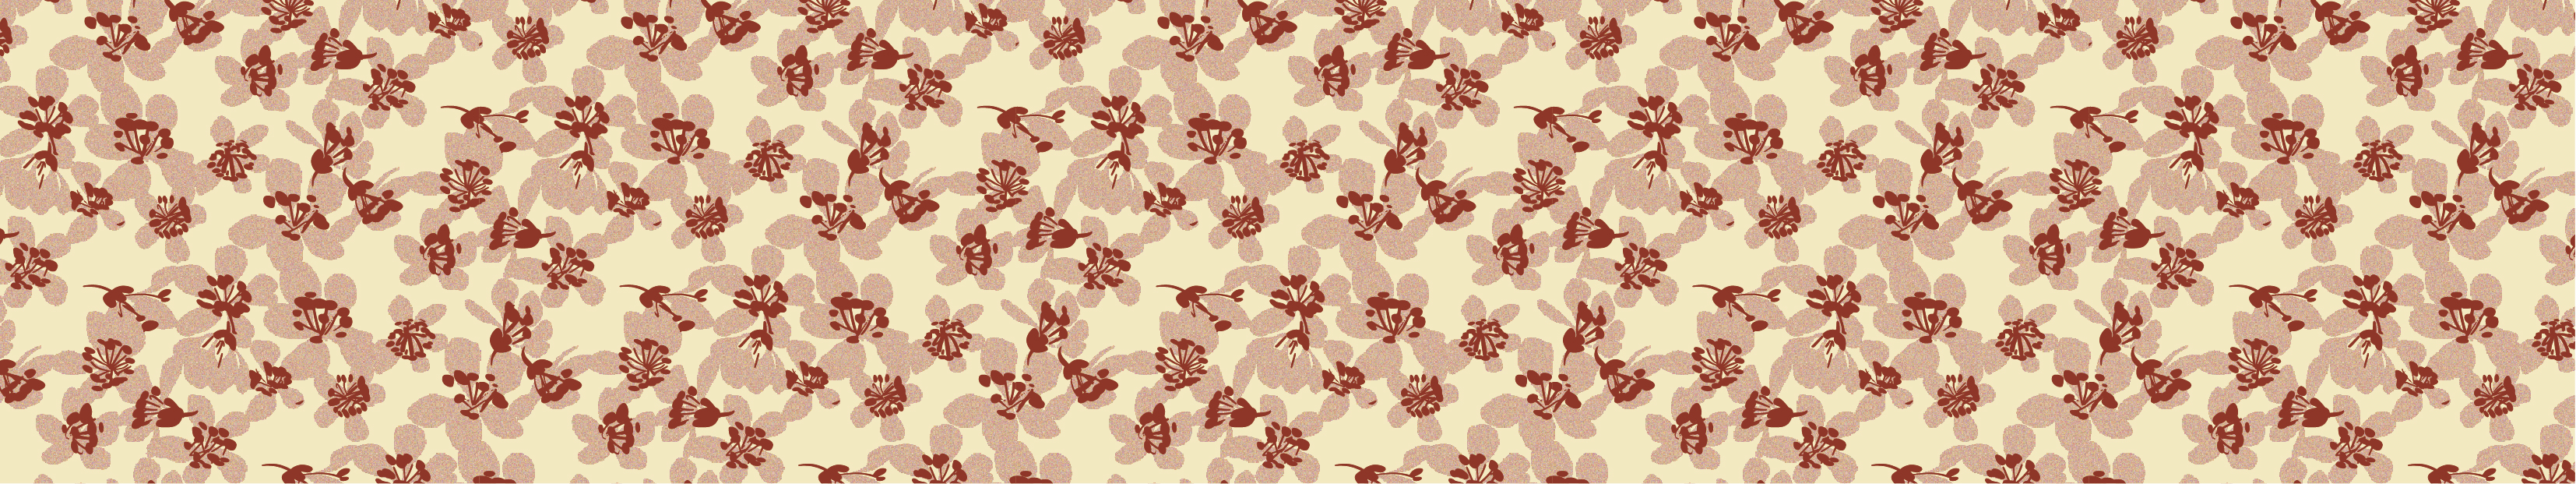 Cherry Blossoms - Transfer Sheets - 30 pcs